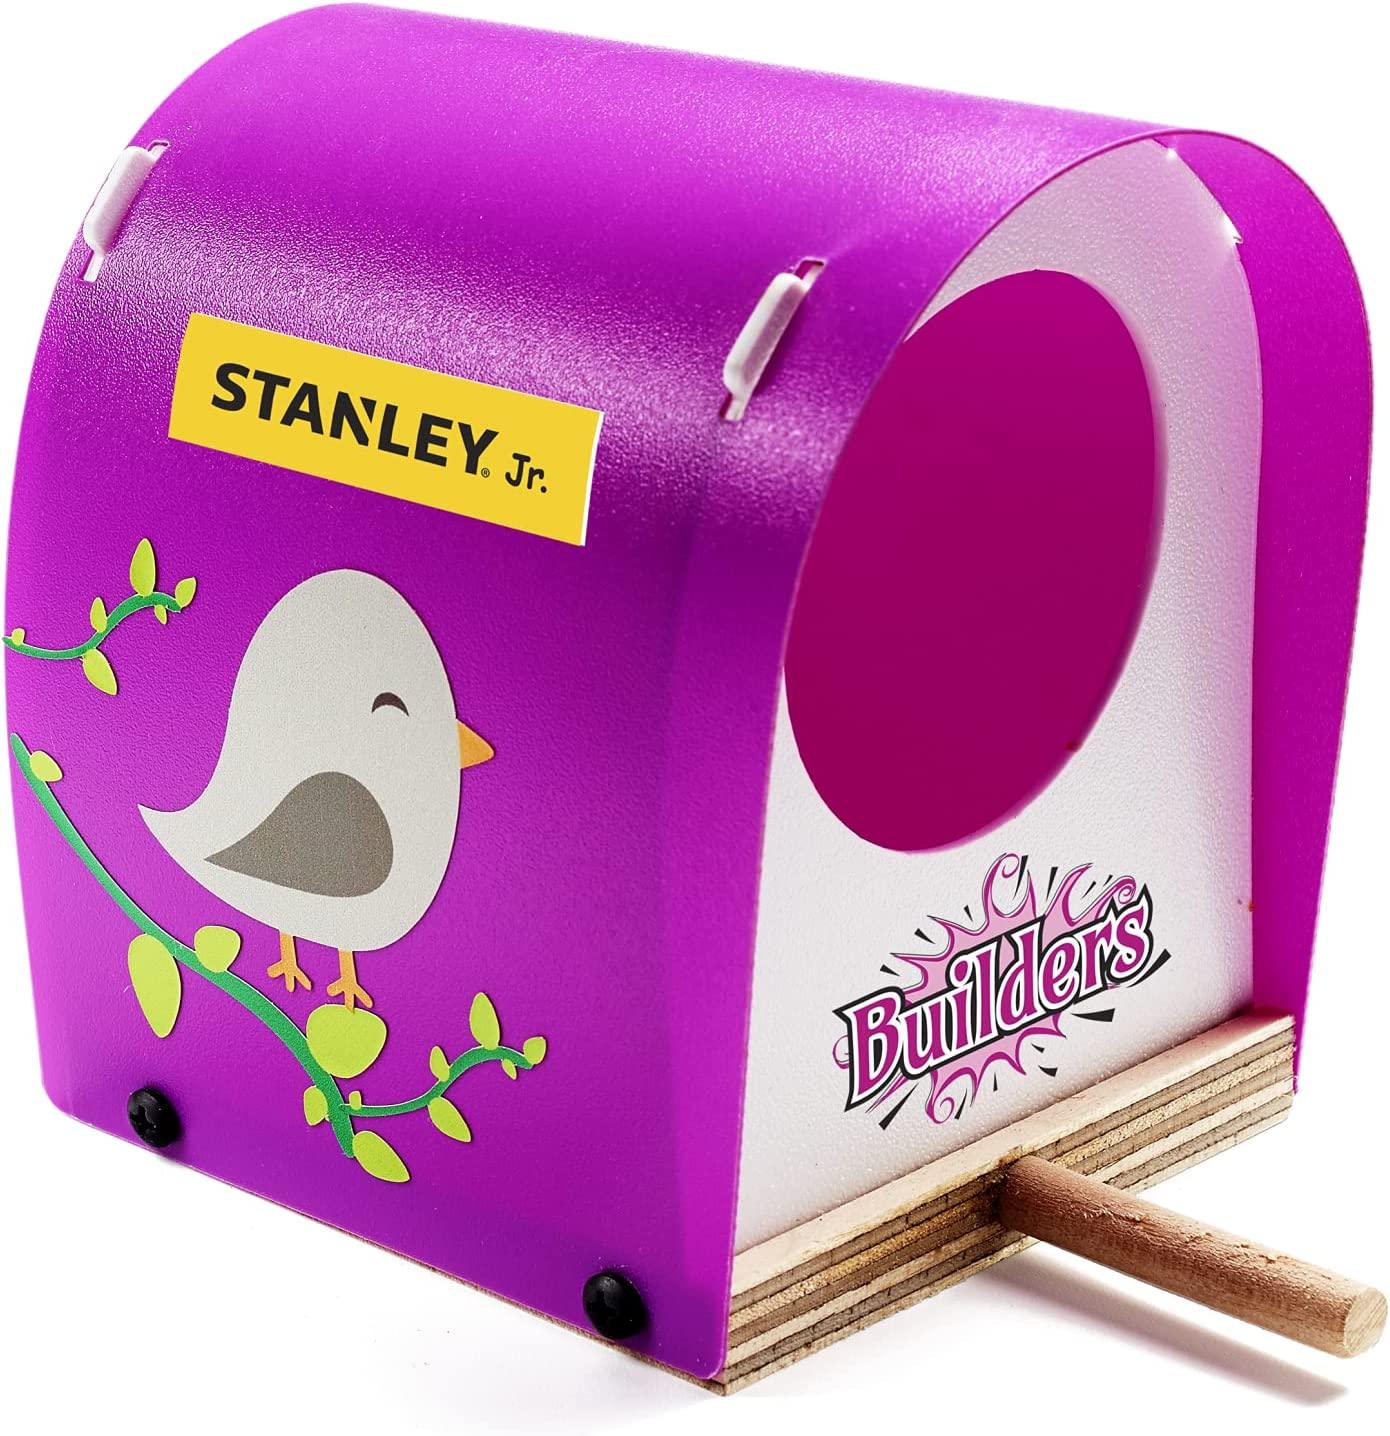 Stanley Jr.: Mini Birdhouse Construction komplet